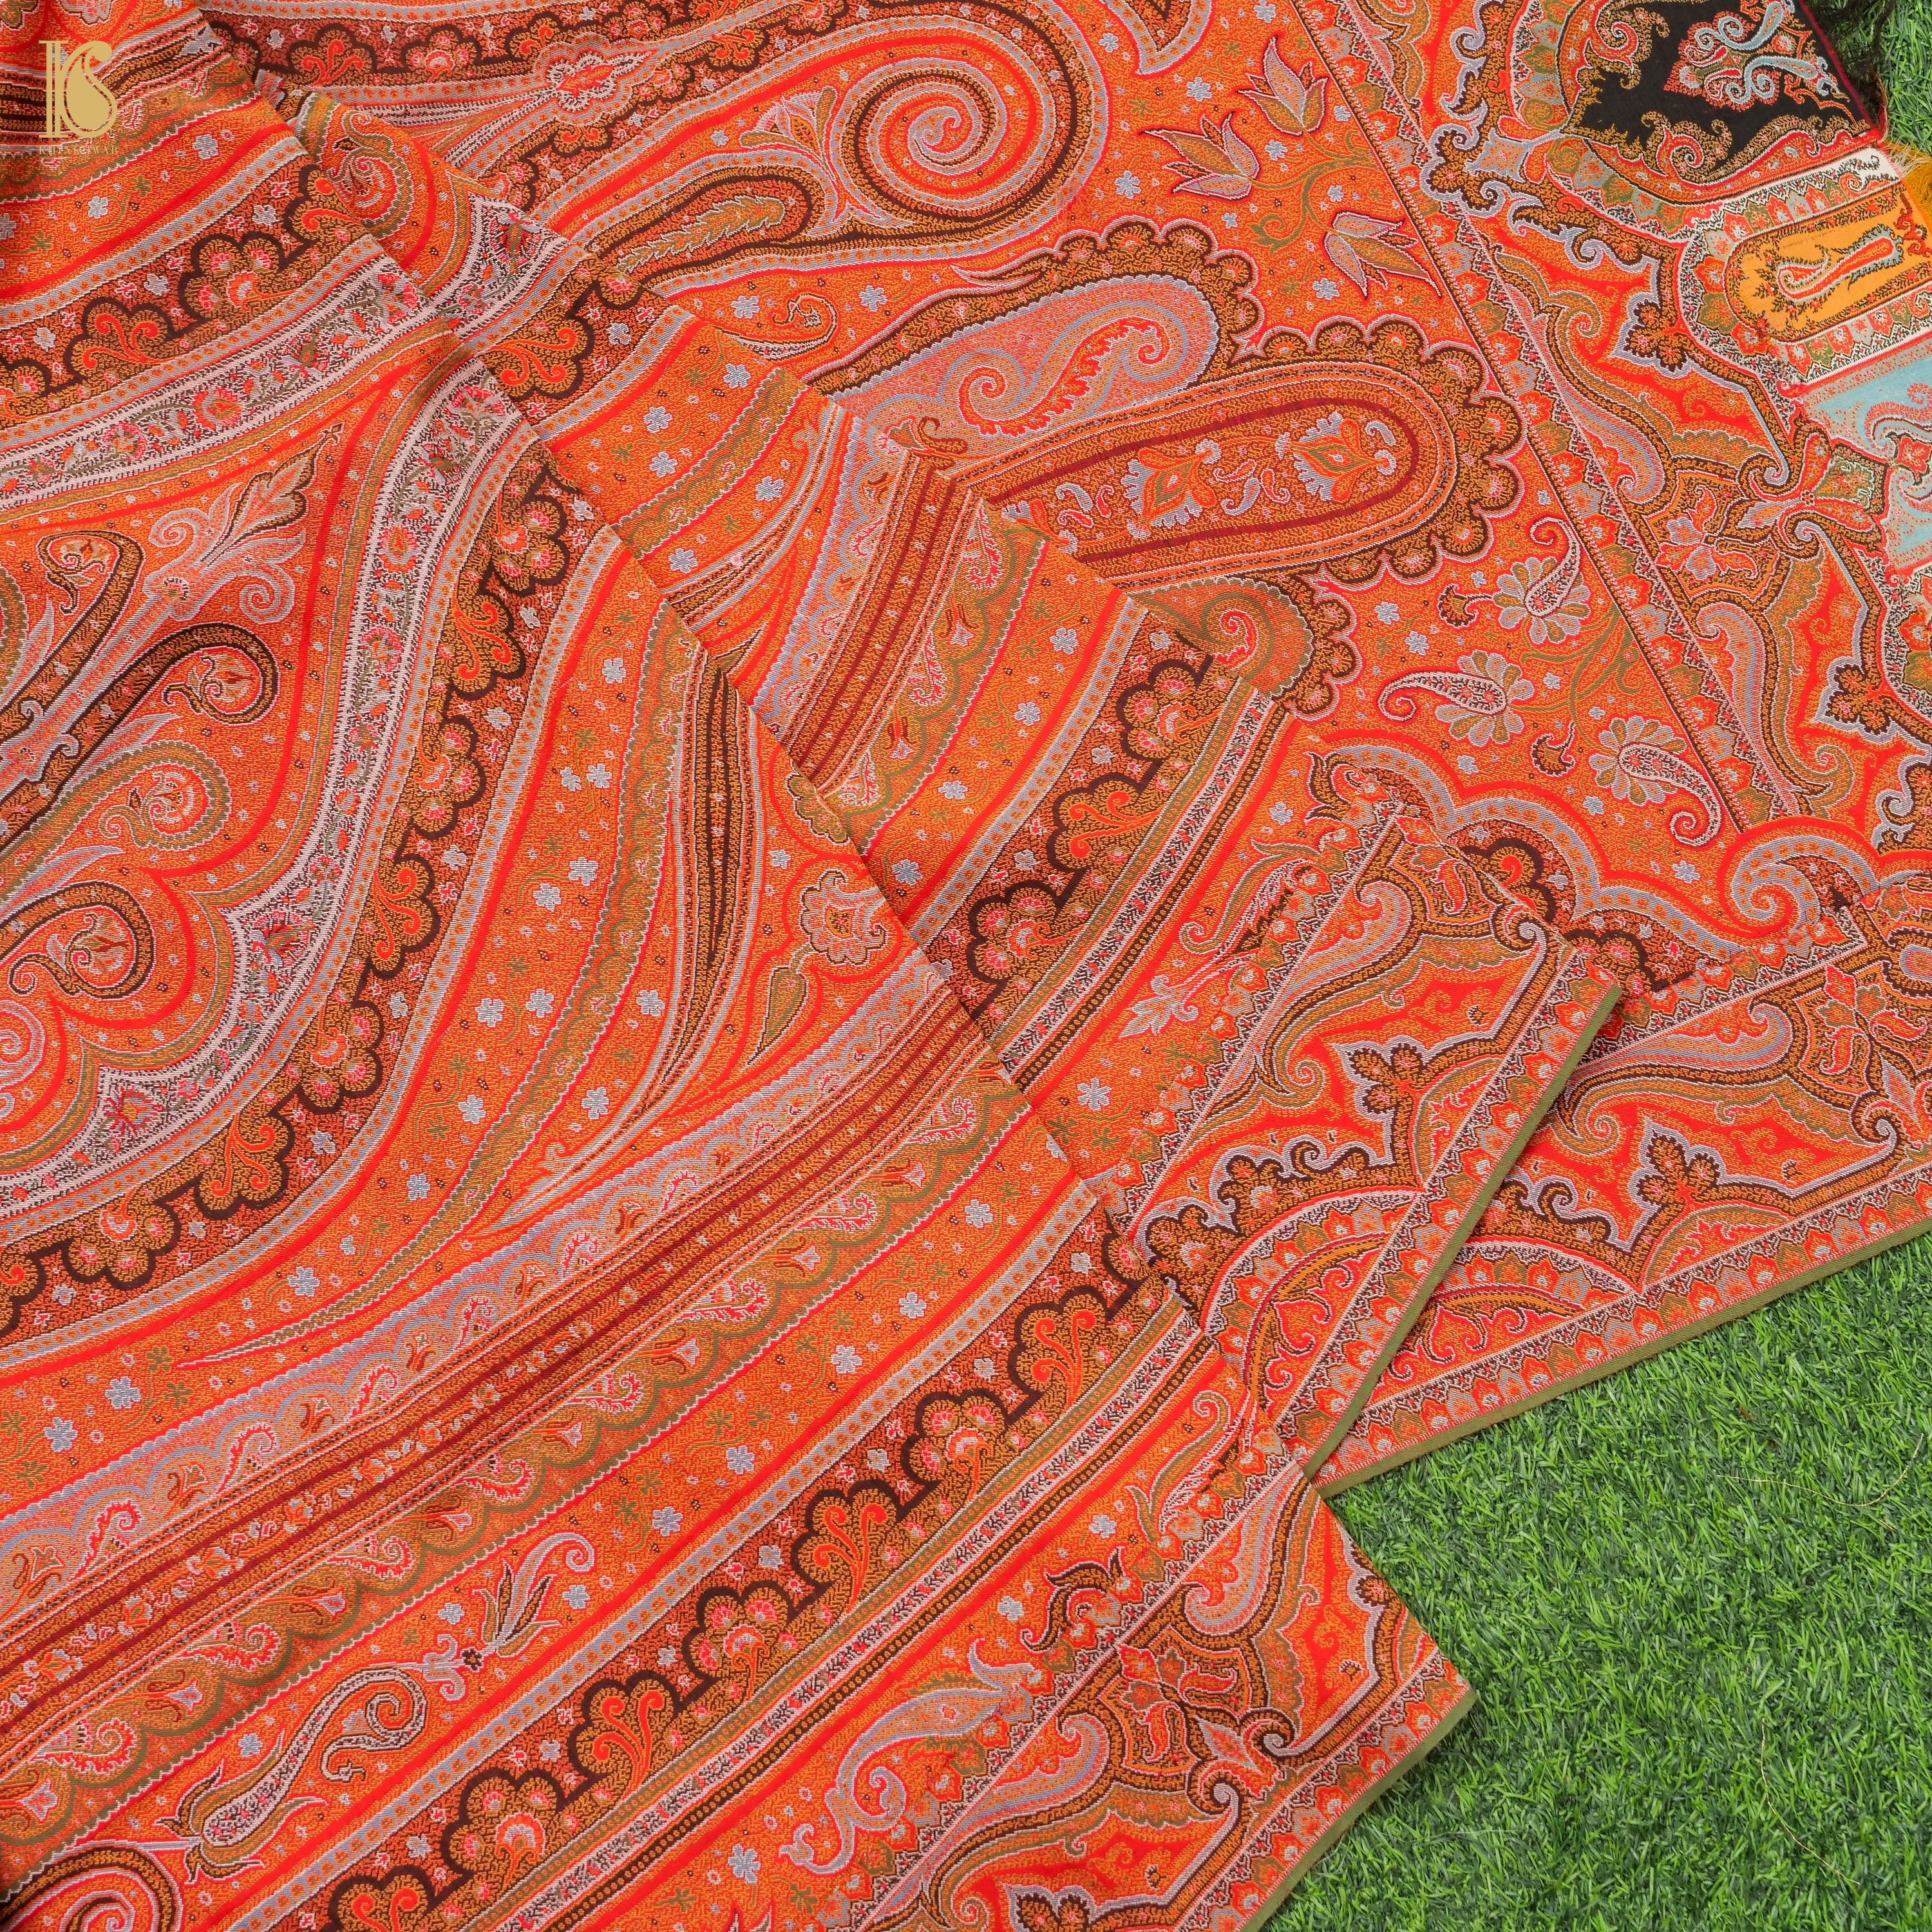 Red Pure Pashmina Handwoven Antique Kani Embriodery Kashmiri Shawl - Khinkhwab